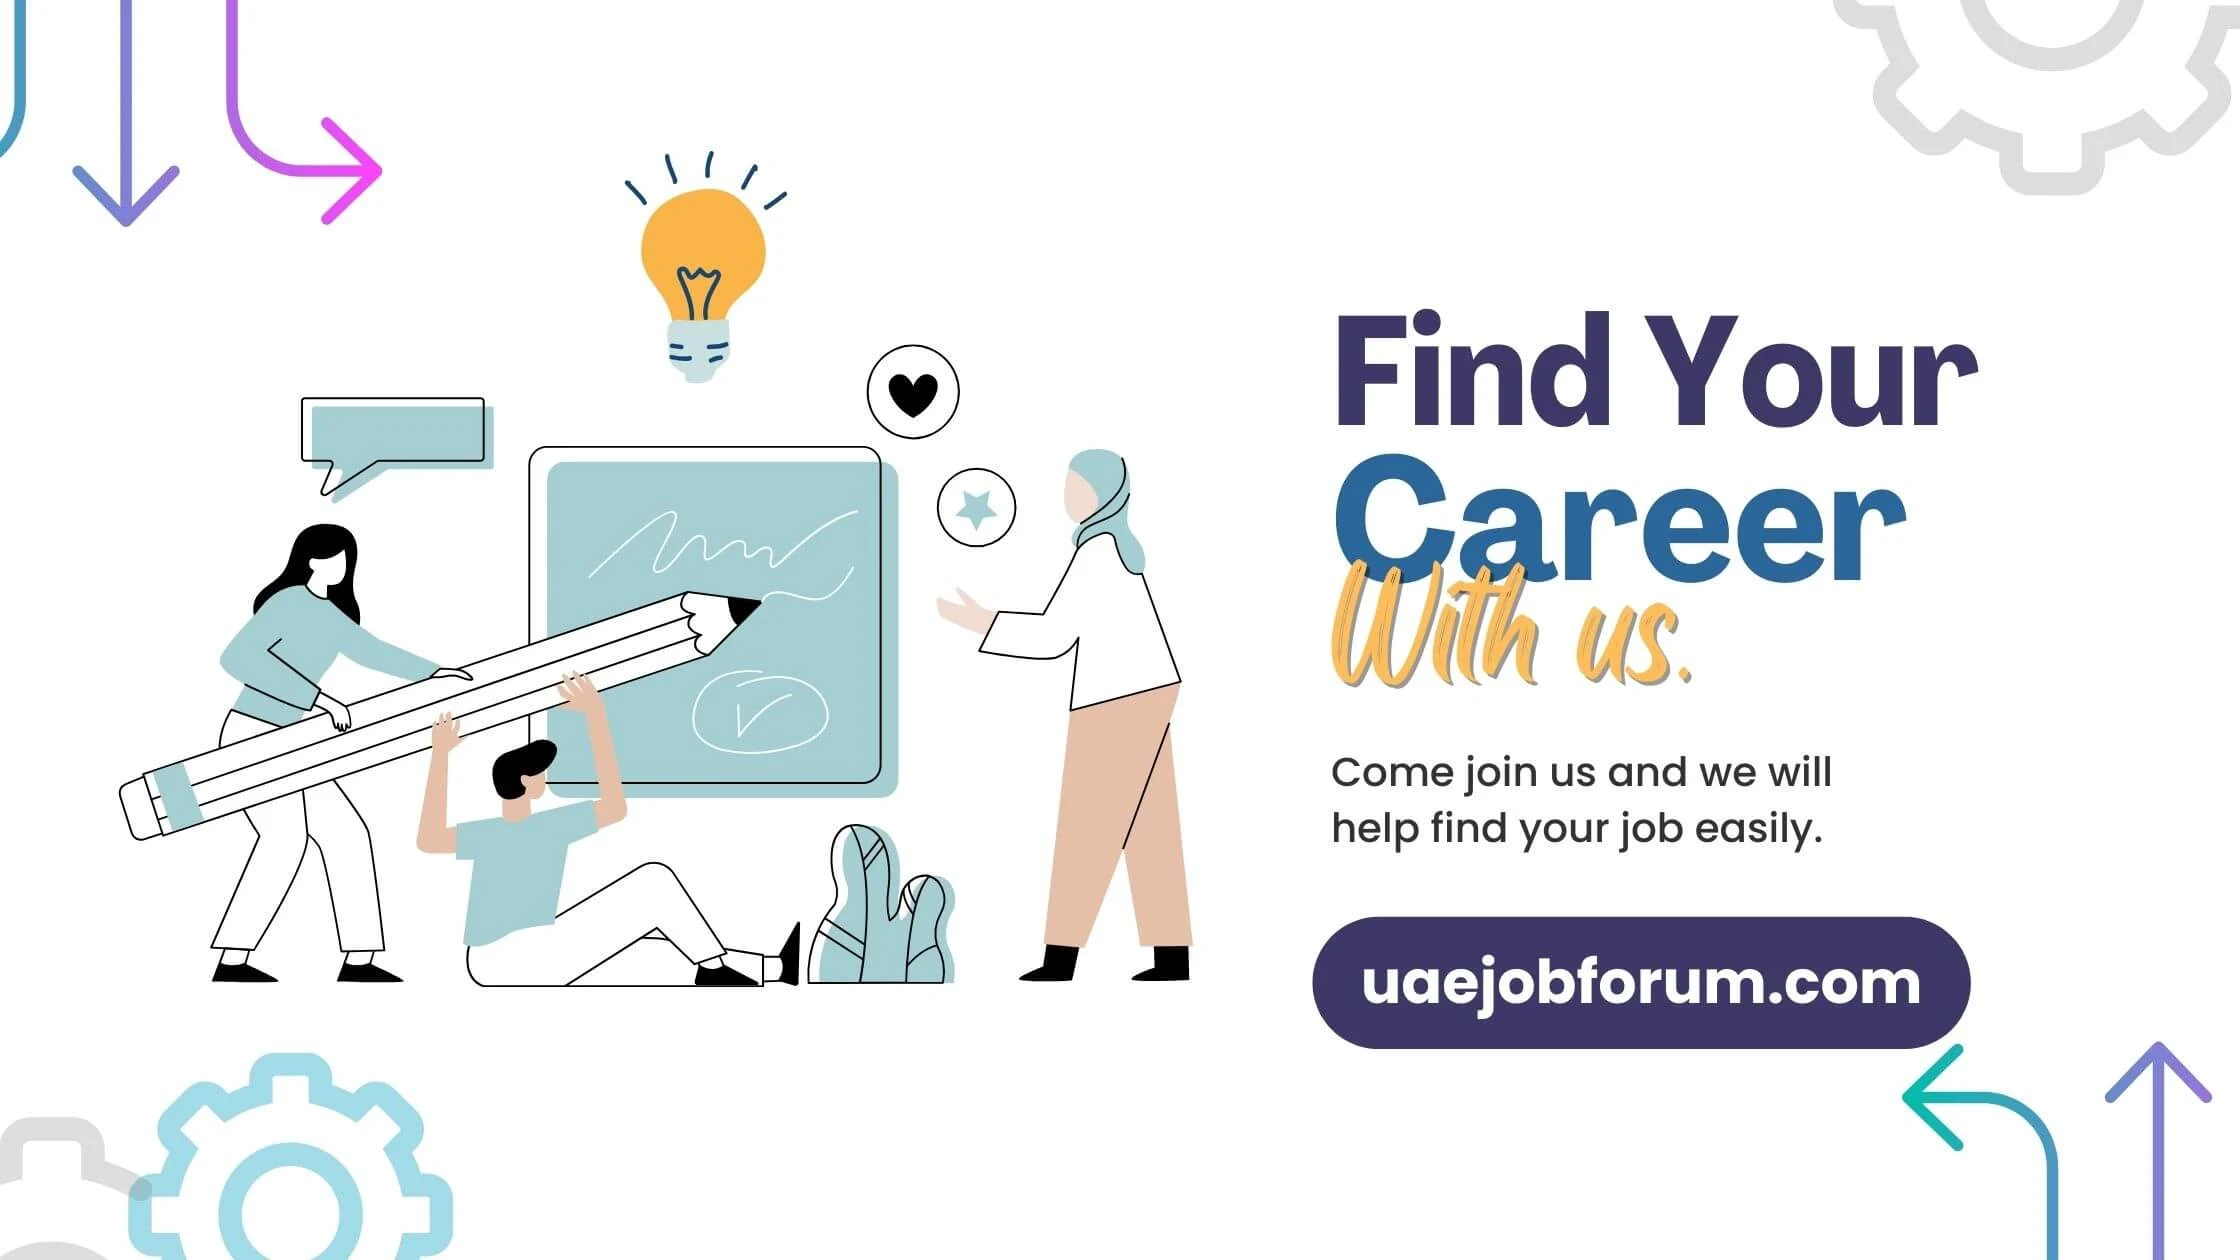 UAE Job Forum Image